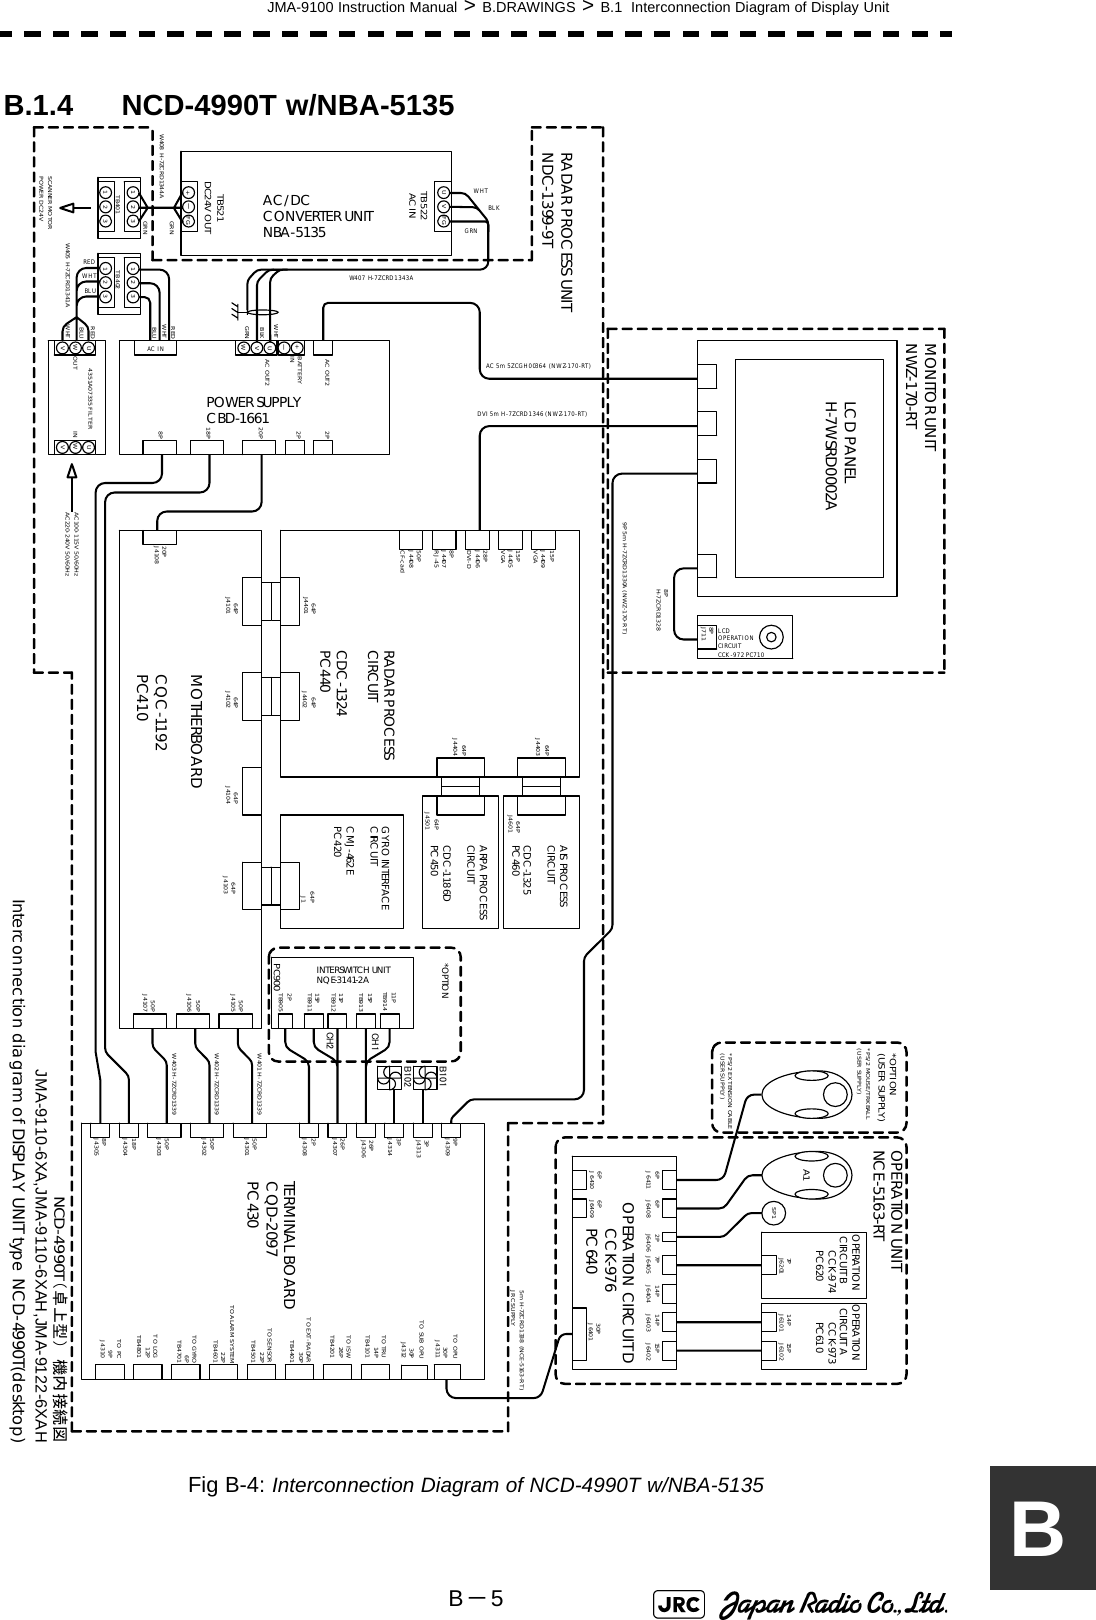 JMA-9100 Instruction Manual &gt; B.DRAWINGS &gt; B.1  Interconnection Diagram of Display UnitB－5BB.1.4 NCD-4990T w/NBA-5135Fig B-4: Interconnection Diagram of NCD-4990T w/NBA-51352PJ430826PJ430726PJ430650PJ430118PJ43048PJ43053PJ43133PJ43149PJ430914PTB4101TO TRUTO ISW26PTB4201TO EXT-RADAR30PTB4401TO S ENSOR22PTB4501TO A LARM  SYSTEM22PTB4601TO GYRO6PTB4701TO LOG12PTB4801TO PC9PJ4310TERMINAL BOARDCQD-2097PC43050PJ430250PJ430330PJ4311TO OPU30PJ4312TO SUB OPU6PJ64116PJ6410 6PJ64096PJ6408 2PJ6406 7PJ6405 14PJ6404 14PJ6403 15PJ640230PJ6401OPERATION CIRCUIT D      CCK-976      PC64014PJ6101 15PJ6102OPERATION  CIRCUIT A      CCK-973      PC6107PJ6201OPERATION  CIRCUIT B      CCK-974      PC620SP1A1*PS/2 EX TENSION  CA BLE(USER SUPPLY )OPERATION UNITNCE-5163-RT5m H -7ZC RD 1 33 8  (N CE - 5 163 - R T)JRC SU PPLYB101B102PC90011PTB91415PTB91311PTB91215PTB9112PTB905INTERSWITCH UNITNQE-3141-2ACH1CH250PJ410550PJ410650PJ4107*OPTIONW401 H -7ZCRD1339W402 H -7ZCRD1339W403 H -7ZCRD133964PJ410364PJ410464PJ410264PJ410164PJ4401 64PJ4402 64PJ1GYRO INTERFACECIRCUITCMJ-462EPC420RADAR PROCESSCIRCUITCDC-1324PC440MOTHERBOARDCQC-1192PC41064PJ440364PJ4404AIS PROCESSCIRCUITCDC-1325PC46064PJ460164PJ4501ARPA PROCESSCIRCUITCDC-1186DPC45015PJ4409VGA15PJ4405VGA28PJ4406DVI-D8PJ4407RJ-4550PJ4408CF-cardLCDOPERATIONCIRCUITCCK -972 PC71 08PJ711MONITOR UNITNWZ-170-RTLCD PANELH-7WSRD0002A8PH-7ZCRD13289P 5m  H-7ZCRD1330A  (NWZ-170-R T)DVI 5m  H-7ZCRD1346 (NWZ-170-RT)20PJ41088PPOWER SUPPLYCBD-166118P20P*PS/2 MOUSE/TRKBALL(USER SUPPLY)*OPTION(USER SUPPLY)2P2PAC OUT2+ーUVWBATTERYINAC OUT2AC INUWVUWV4351A07335 FILTERINOUTREDWHTBLUREDWHTBLUAC 5m 5ZCGH00364 (NWZ-170-RT)U V FG+ーFGTB522AC INTB521DC24V OUTAC/DC CONVERTER UNITNBA-5135AC100-115V 50/60HzAC220-240V 50/60HzSCAN NER MOTORPOWER  DC24VNCD-4990T（卓上型）　機内接続図Interconnection diagram of DISPLAY UNIT type NCD-4990T(desktop)JMA-9110-6XA,JMA-9110-6XAH,JMA-9122-6XAHRADAR PROCESS UNITNDC-1399-9T1 2 31 2 3REDBLUWHTW405 H-7ZCRD1341ATB4021 2 31 2 3TB401W408 H-7ZCRD1344A GR NGR NW407 H-7ZCRD1343AWHTBLKGRNWHTBLKGRN